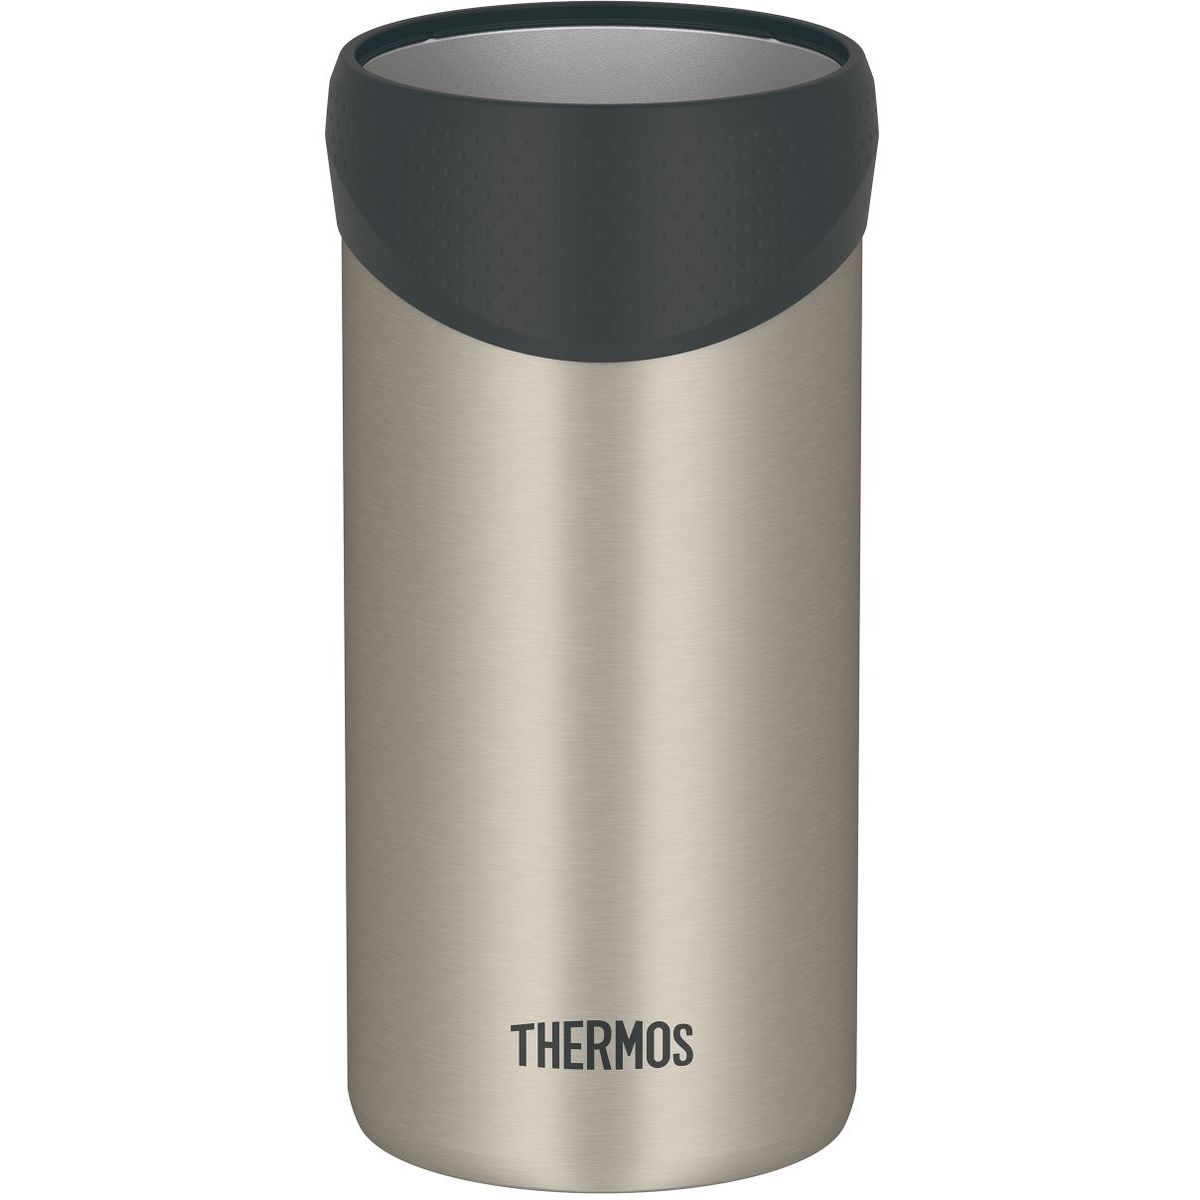 THERMOS 保冷缶ホルダー ステンレスマット 350・500mL缶対応 真空断熱 保温保冷